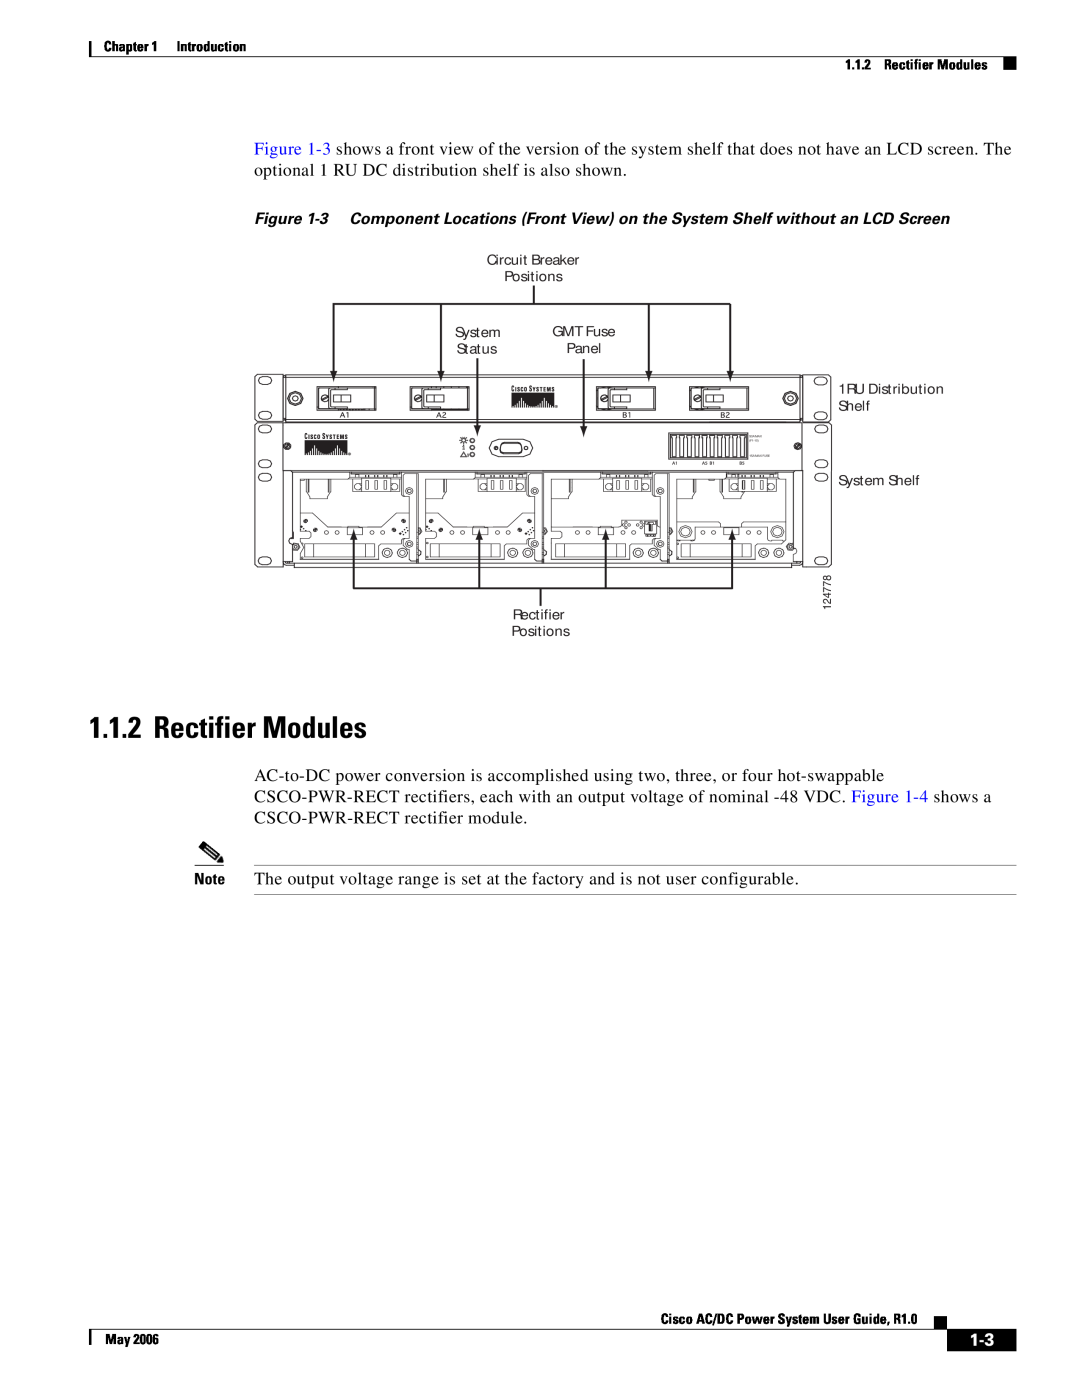 Cisco Systems 124778, 124792 Rectifier Modules, Circuit Breaker Positions, System, Status, Panel, 1RU Distribution Shelf 